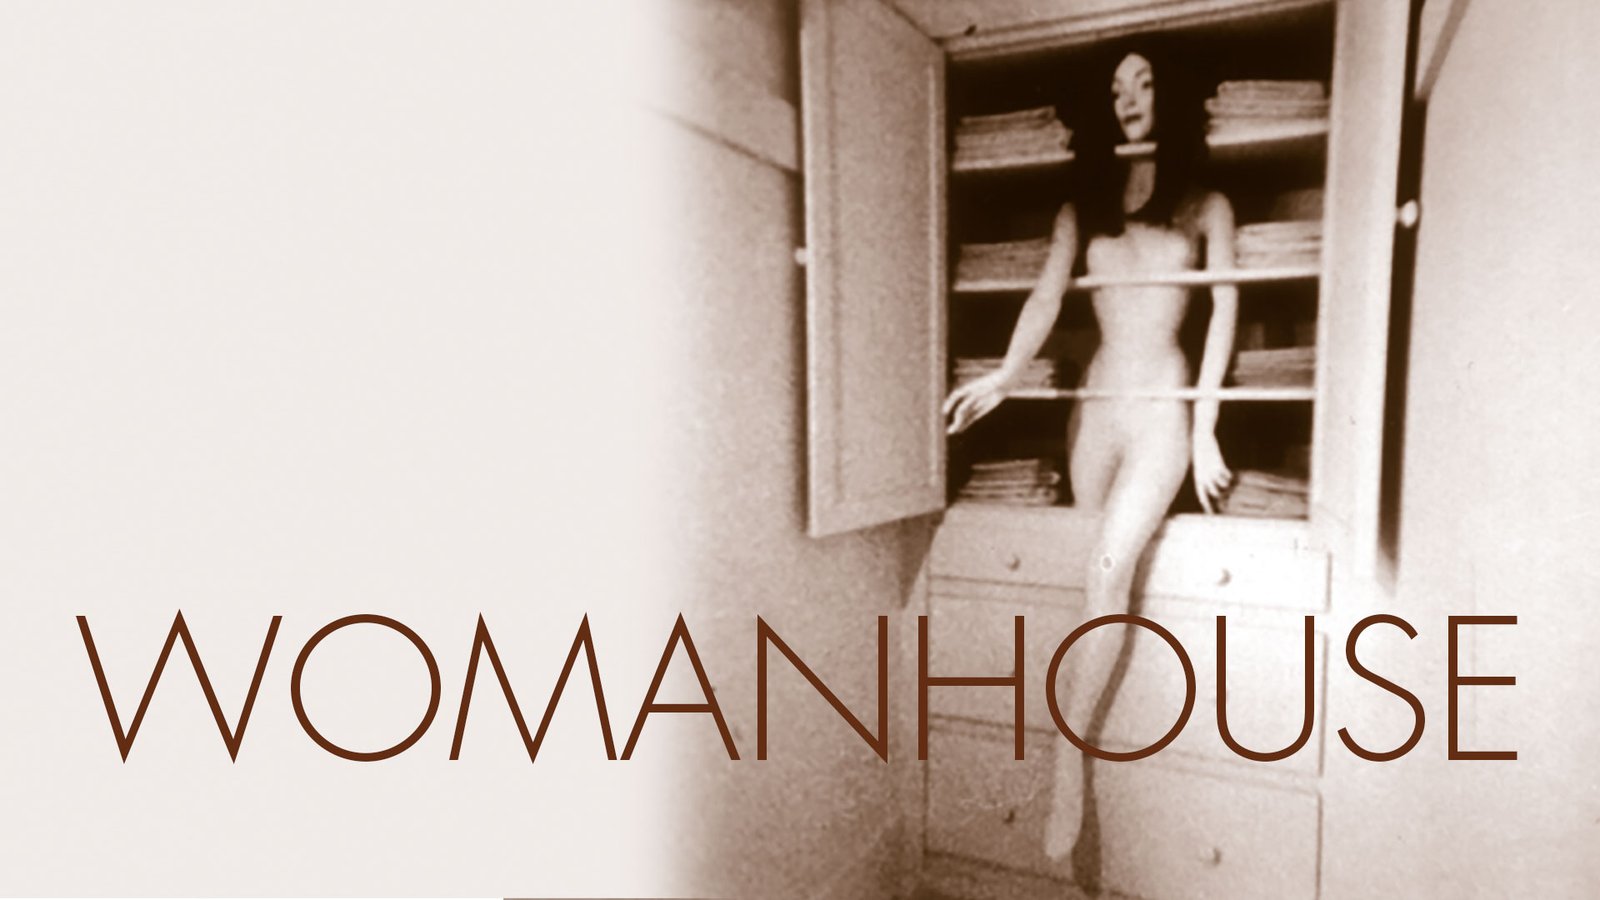 Womanhouse - Feminist Art in the 1970s